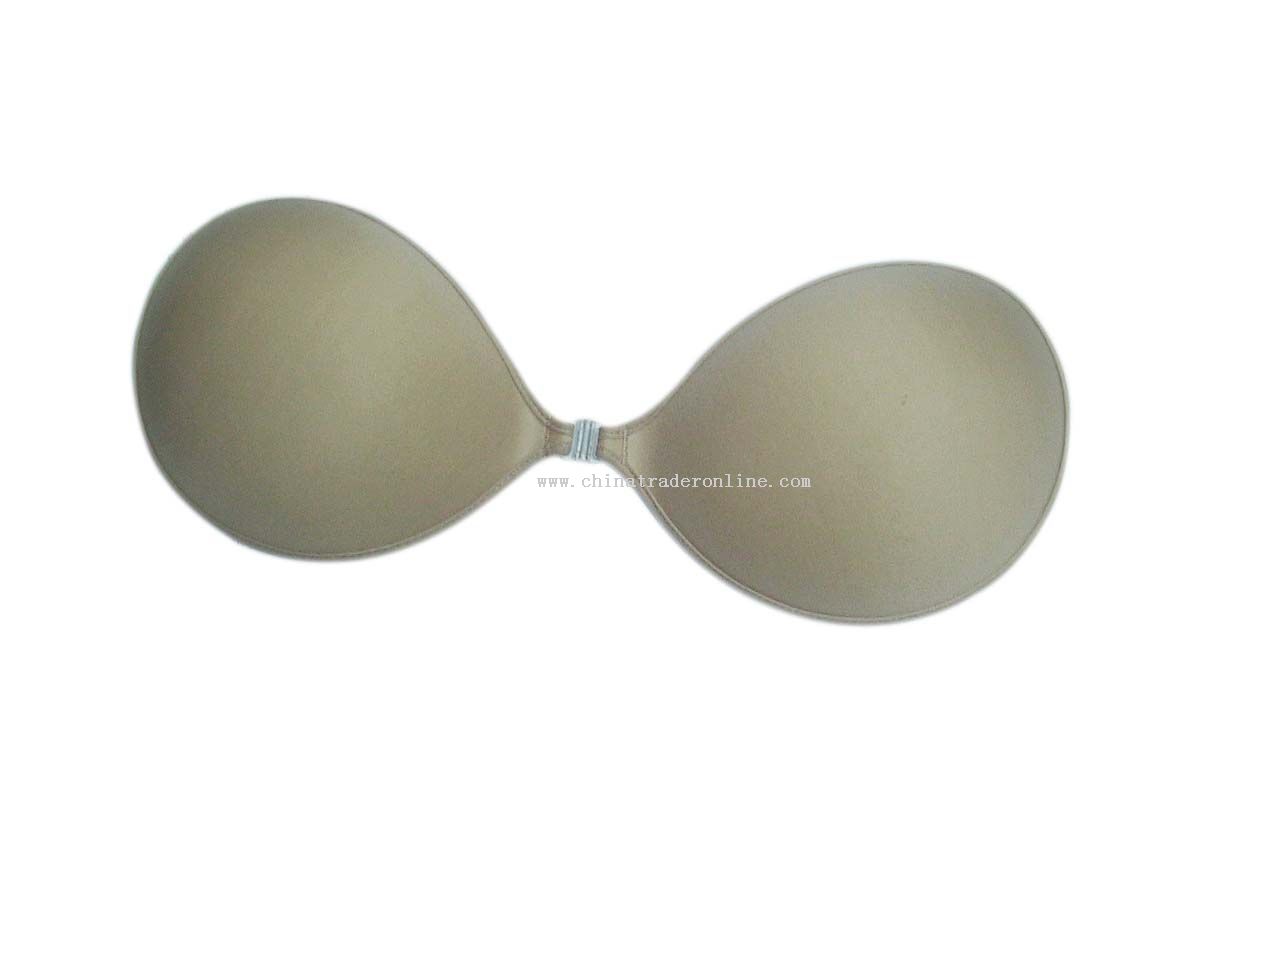 Self-adhesive cloth bra